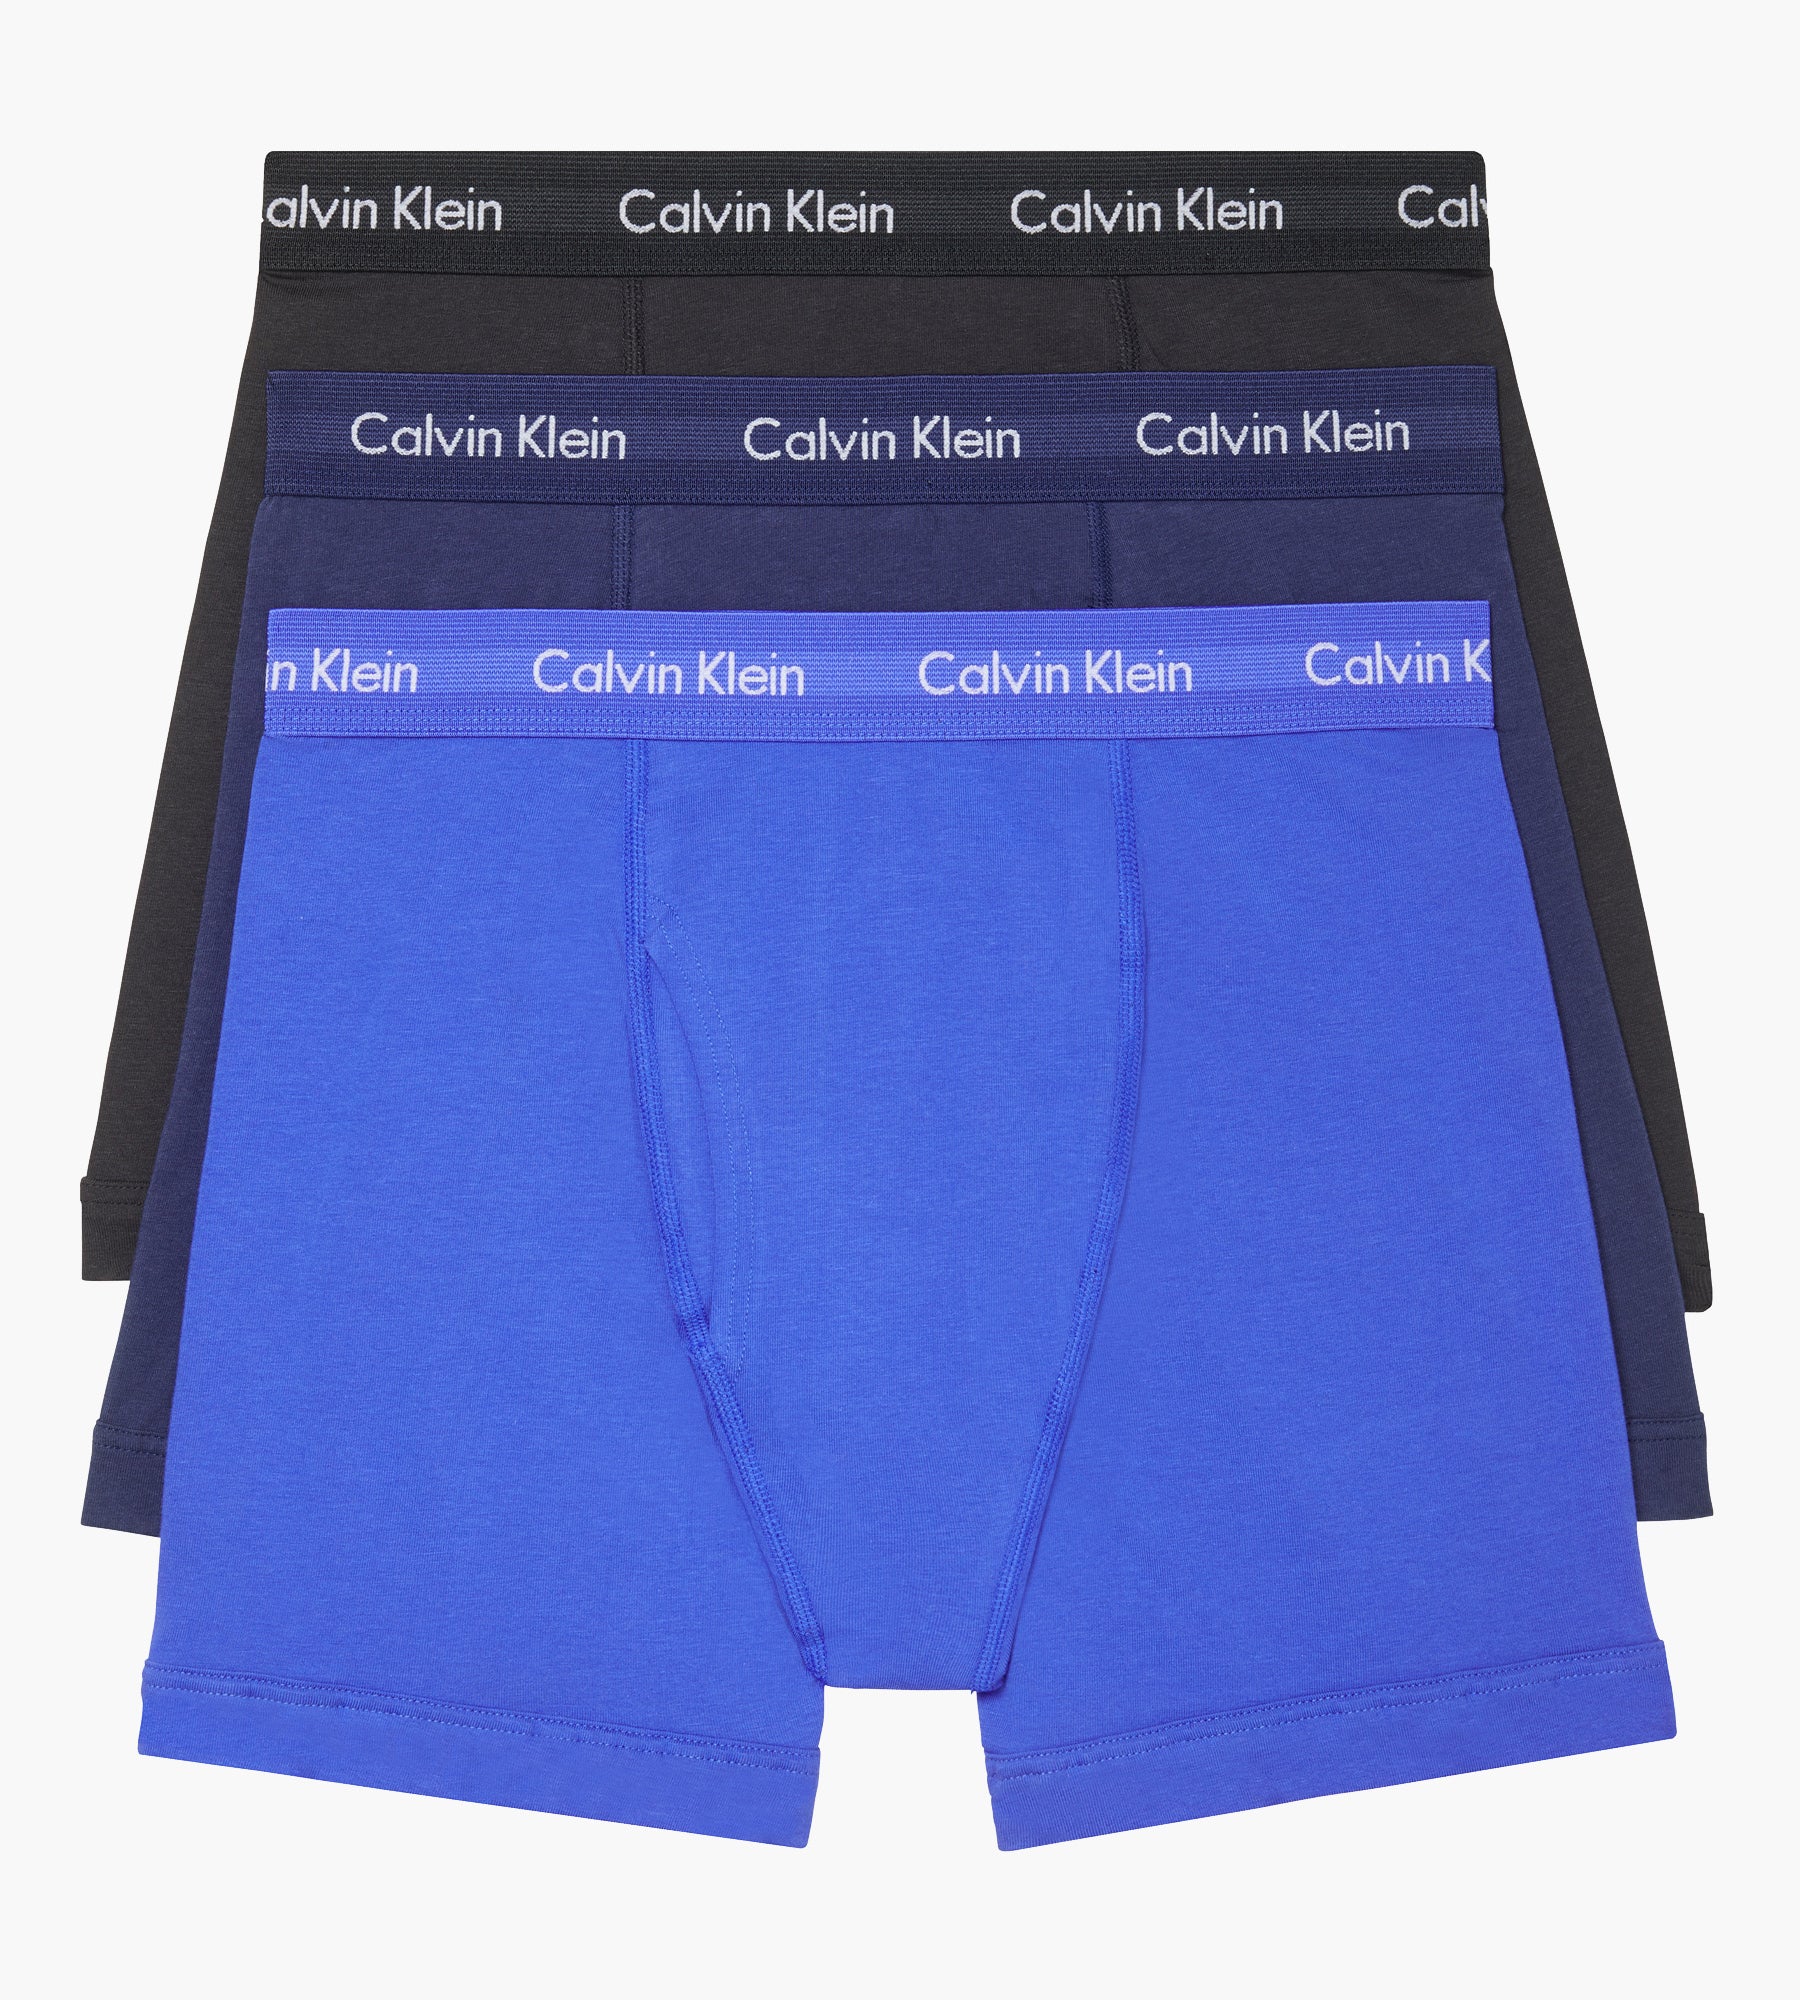 CRIVIT Performance Blue Underwear BNWT (RARE & COLLECTABLE) 4304493040465  on eBid United States